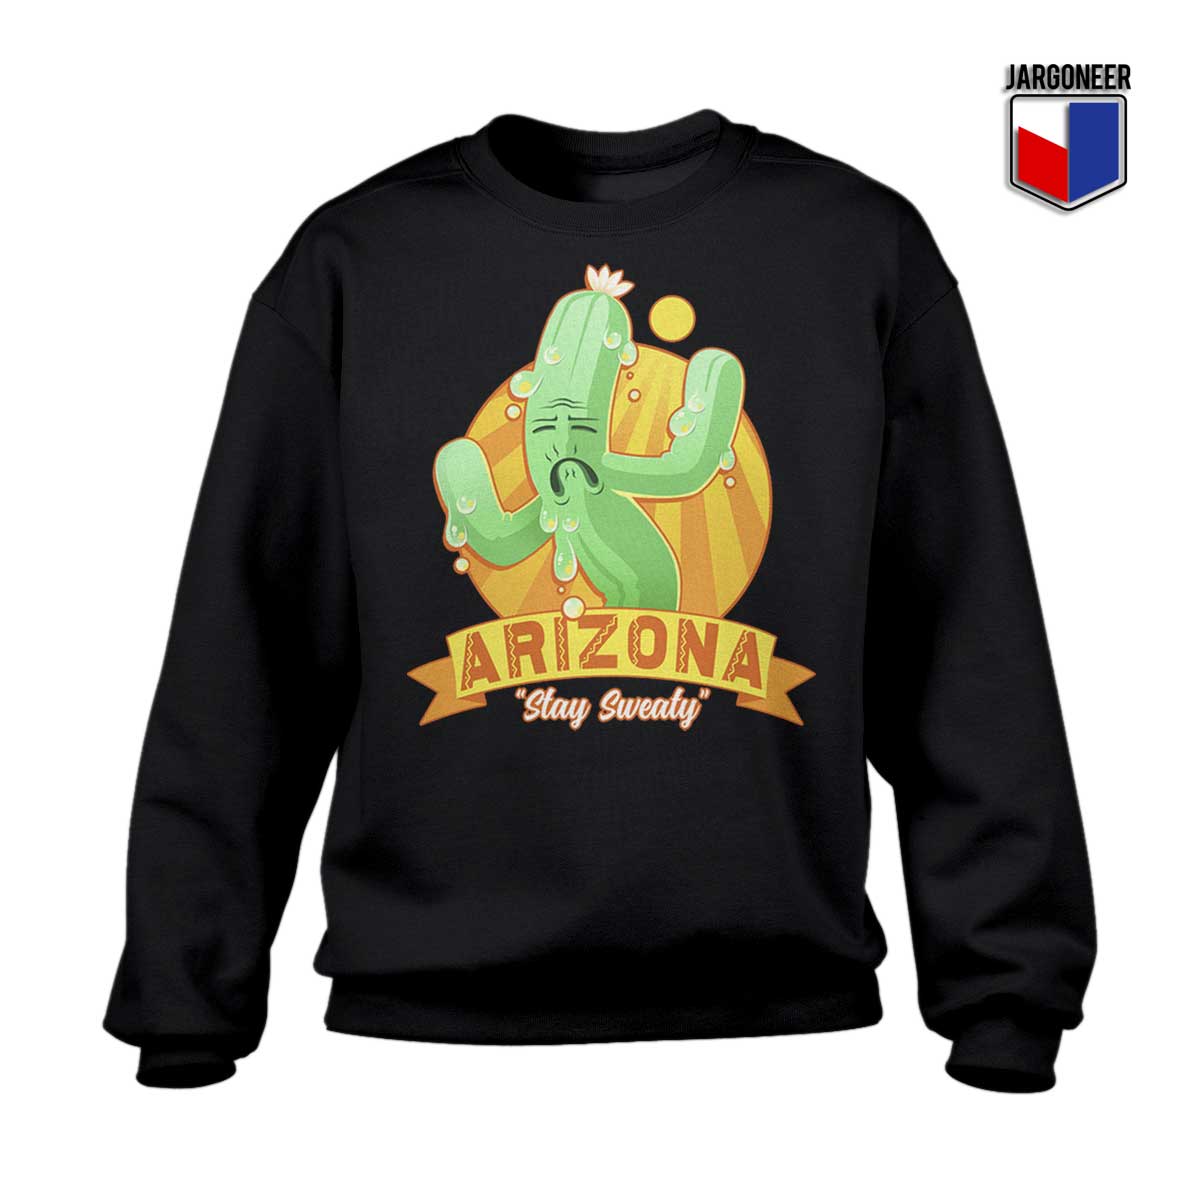 Arizona Stay Sweaty Sweatshirt - Shop Unique Graphic Cool Shirt Designs